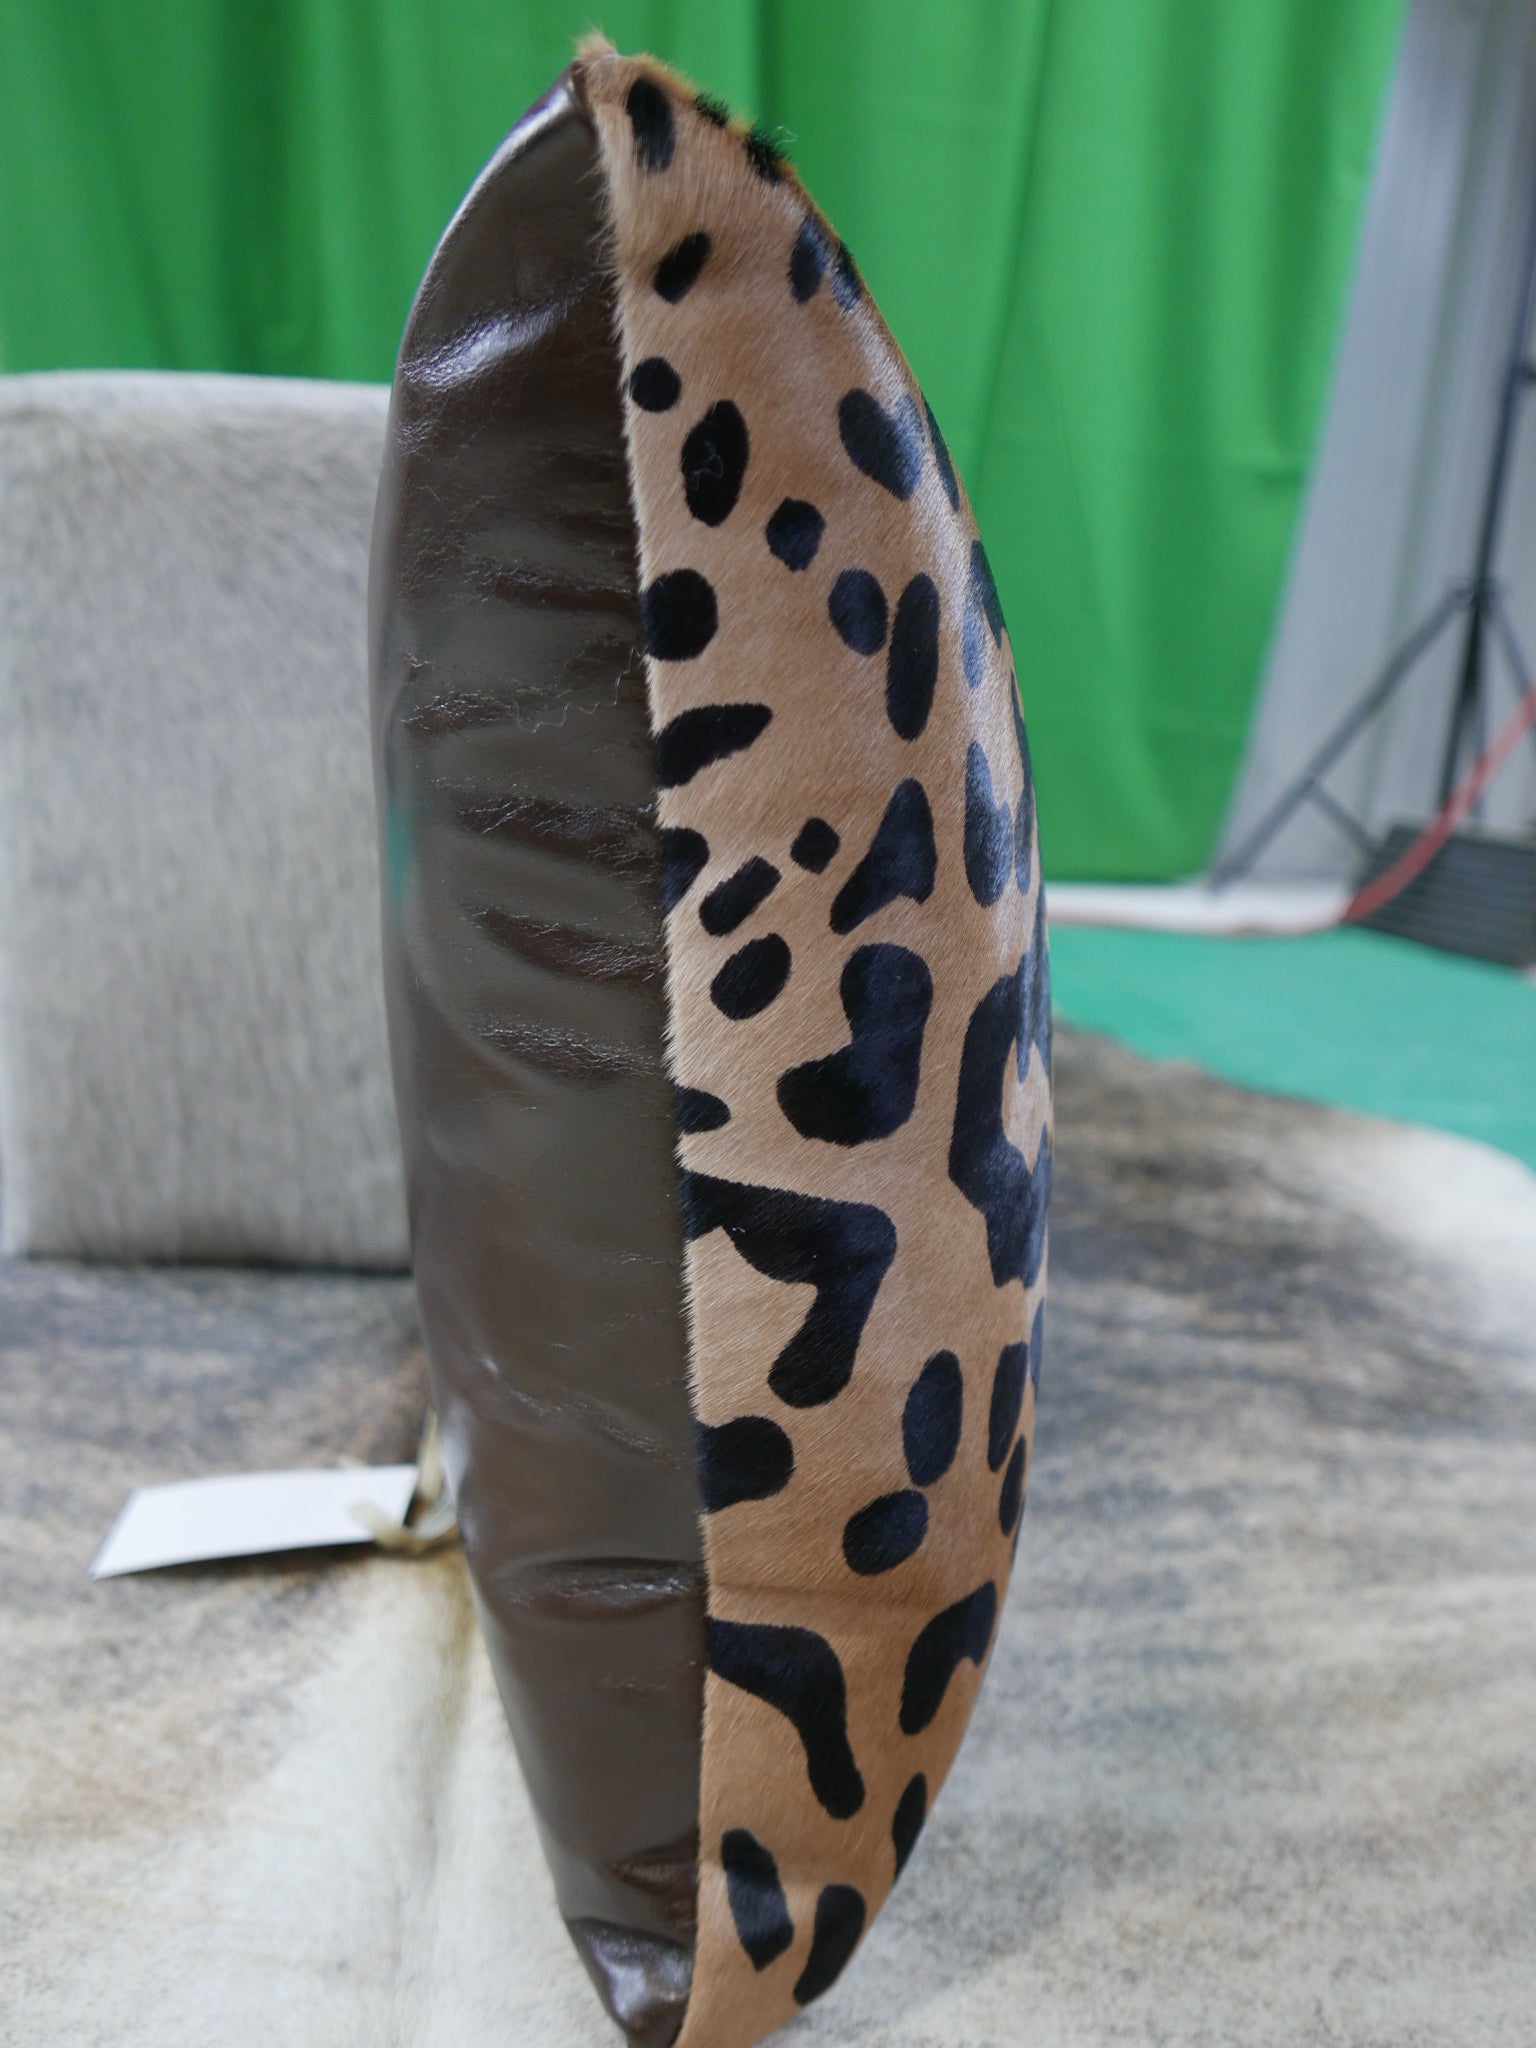 Cowhide Pillow Size: 18"X 18" Jaguar Print Calf Skin Pillow-204